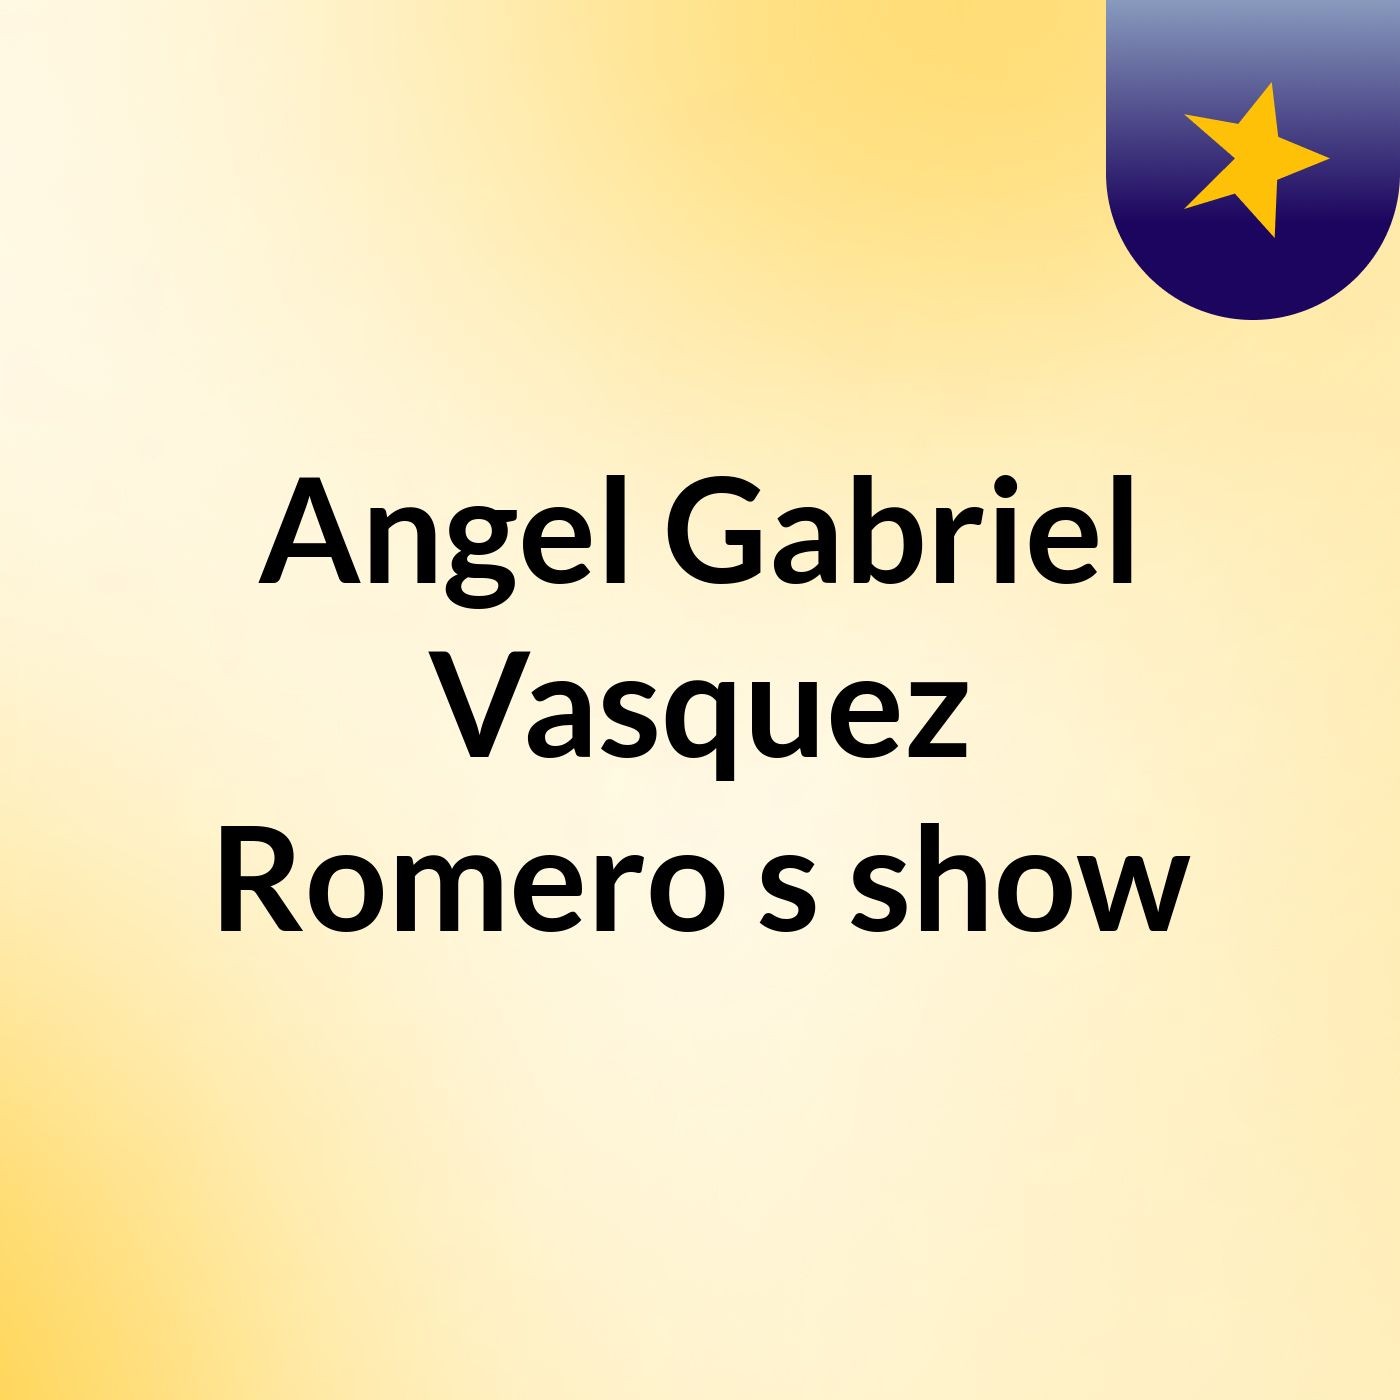 Angel Gabriel Vasquez Romero's show